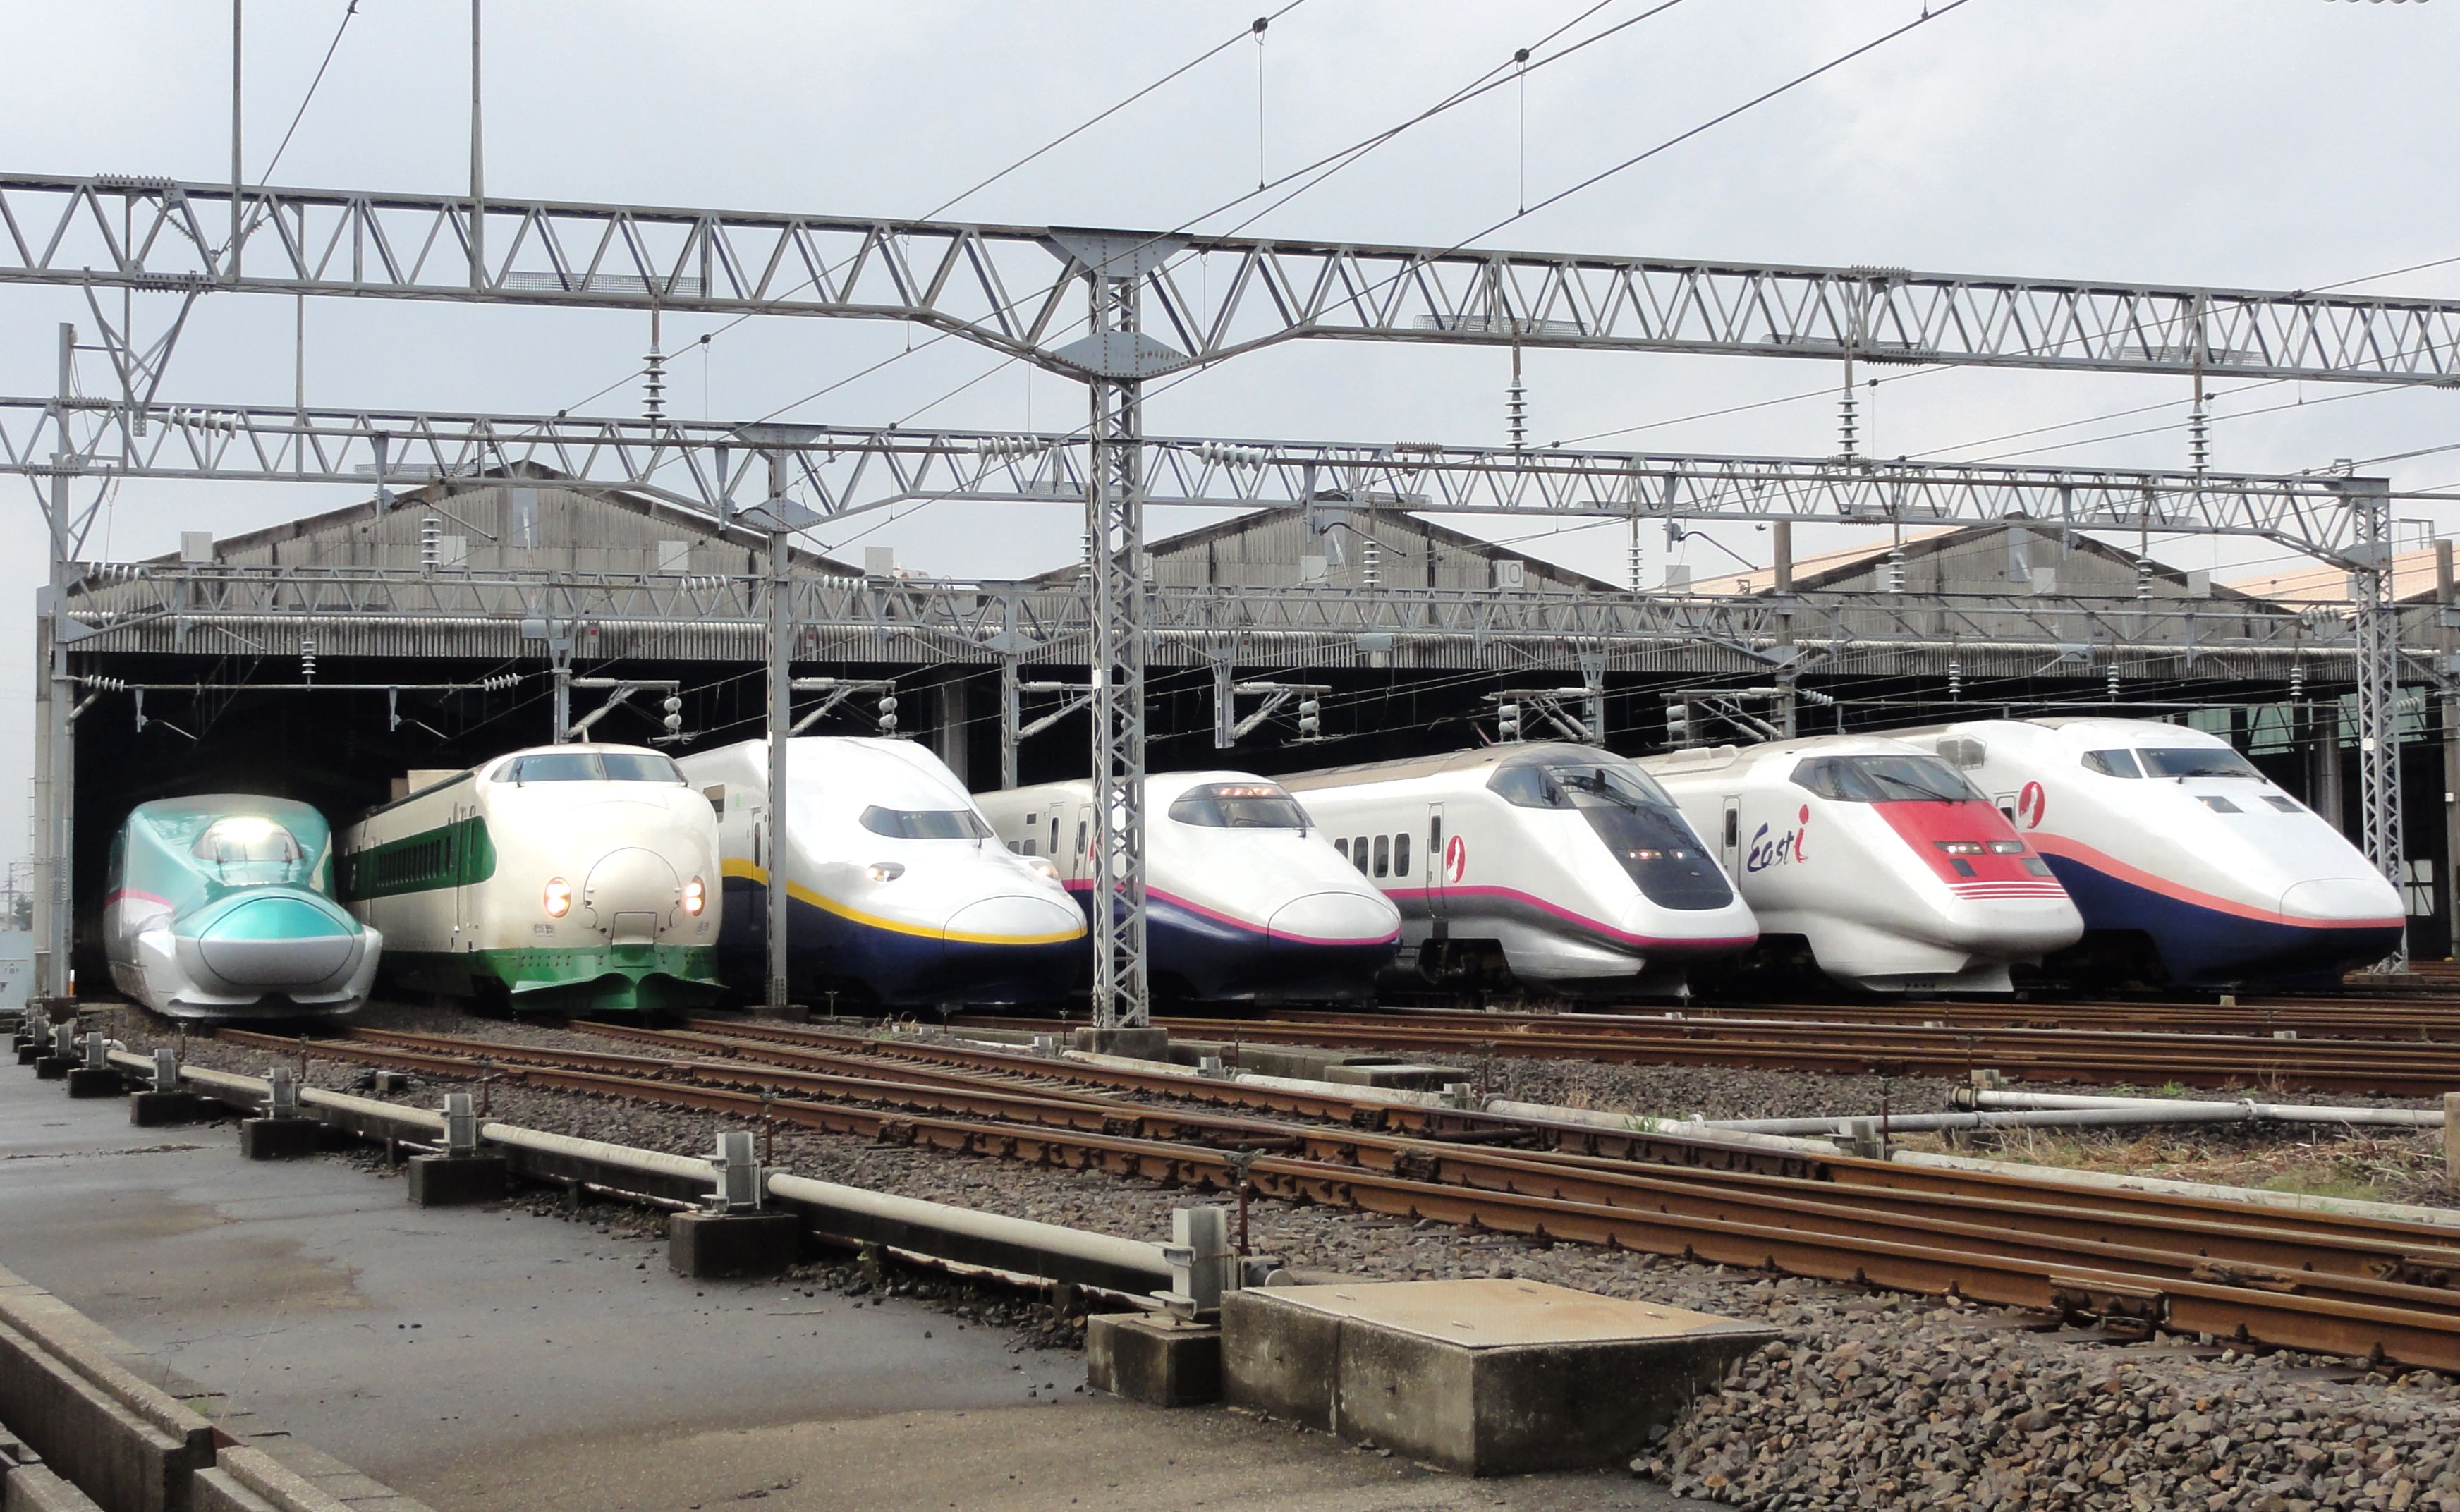 Bullet Train. Japan's high speed bullet trains, also known as Shinkansen trains